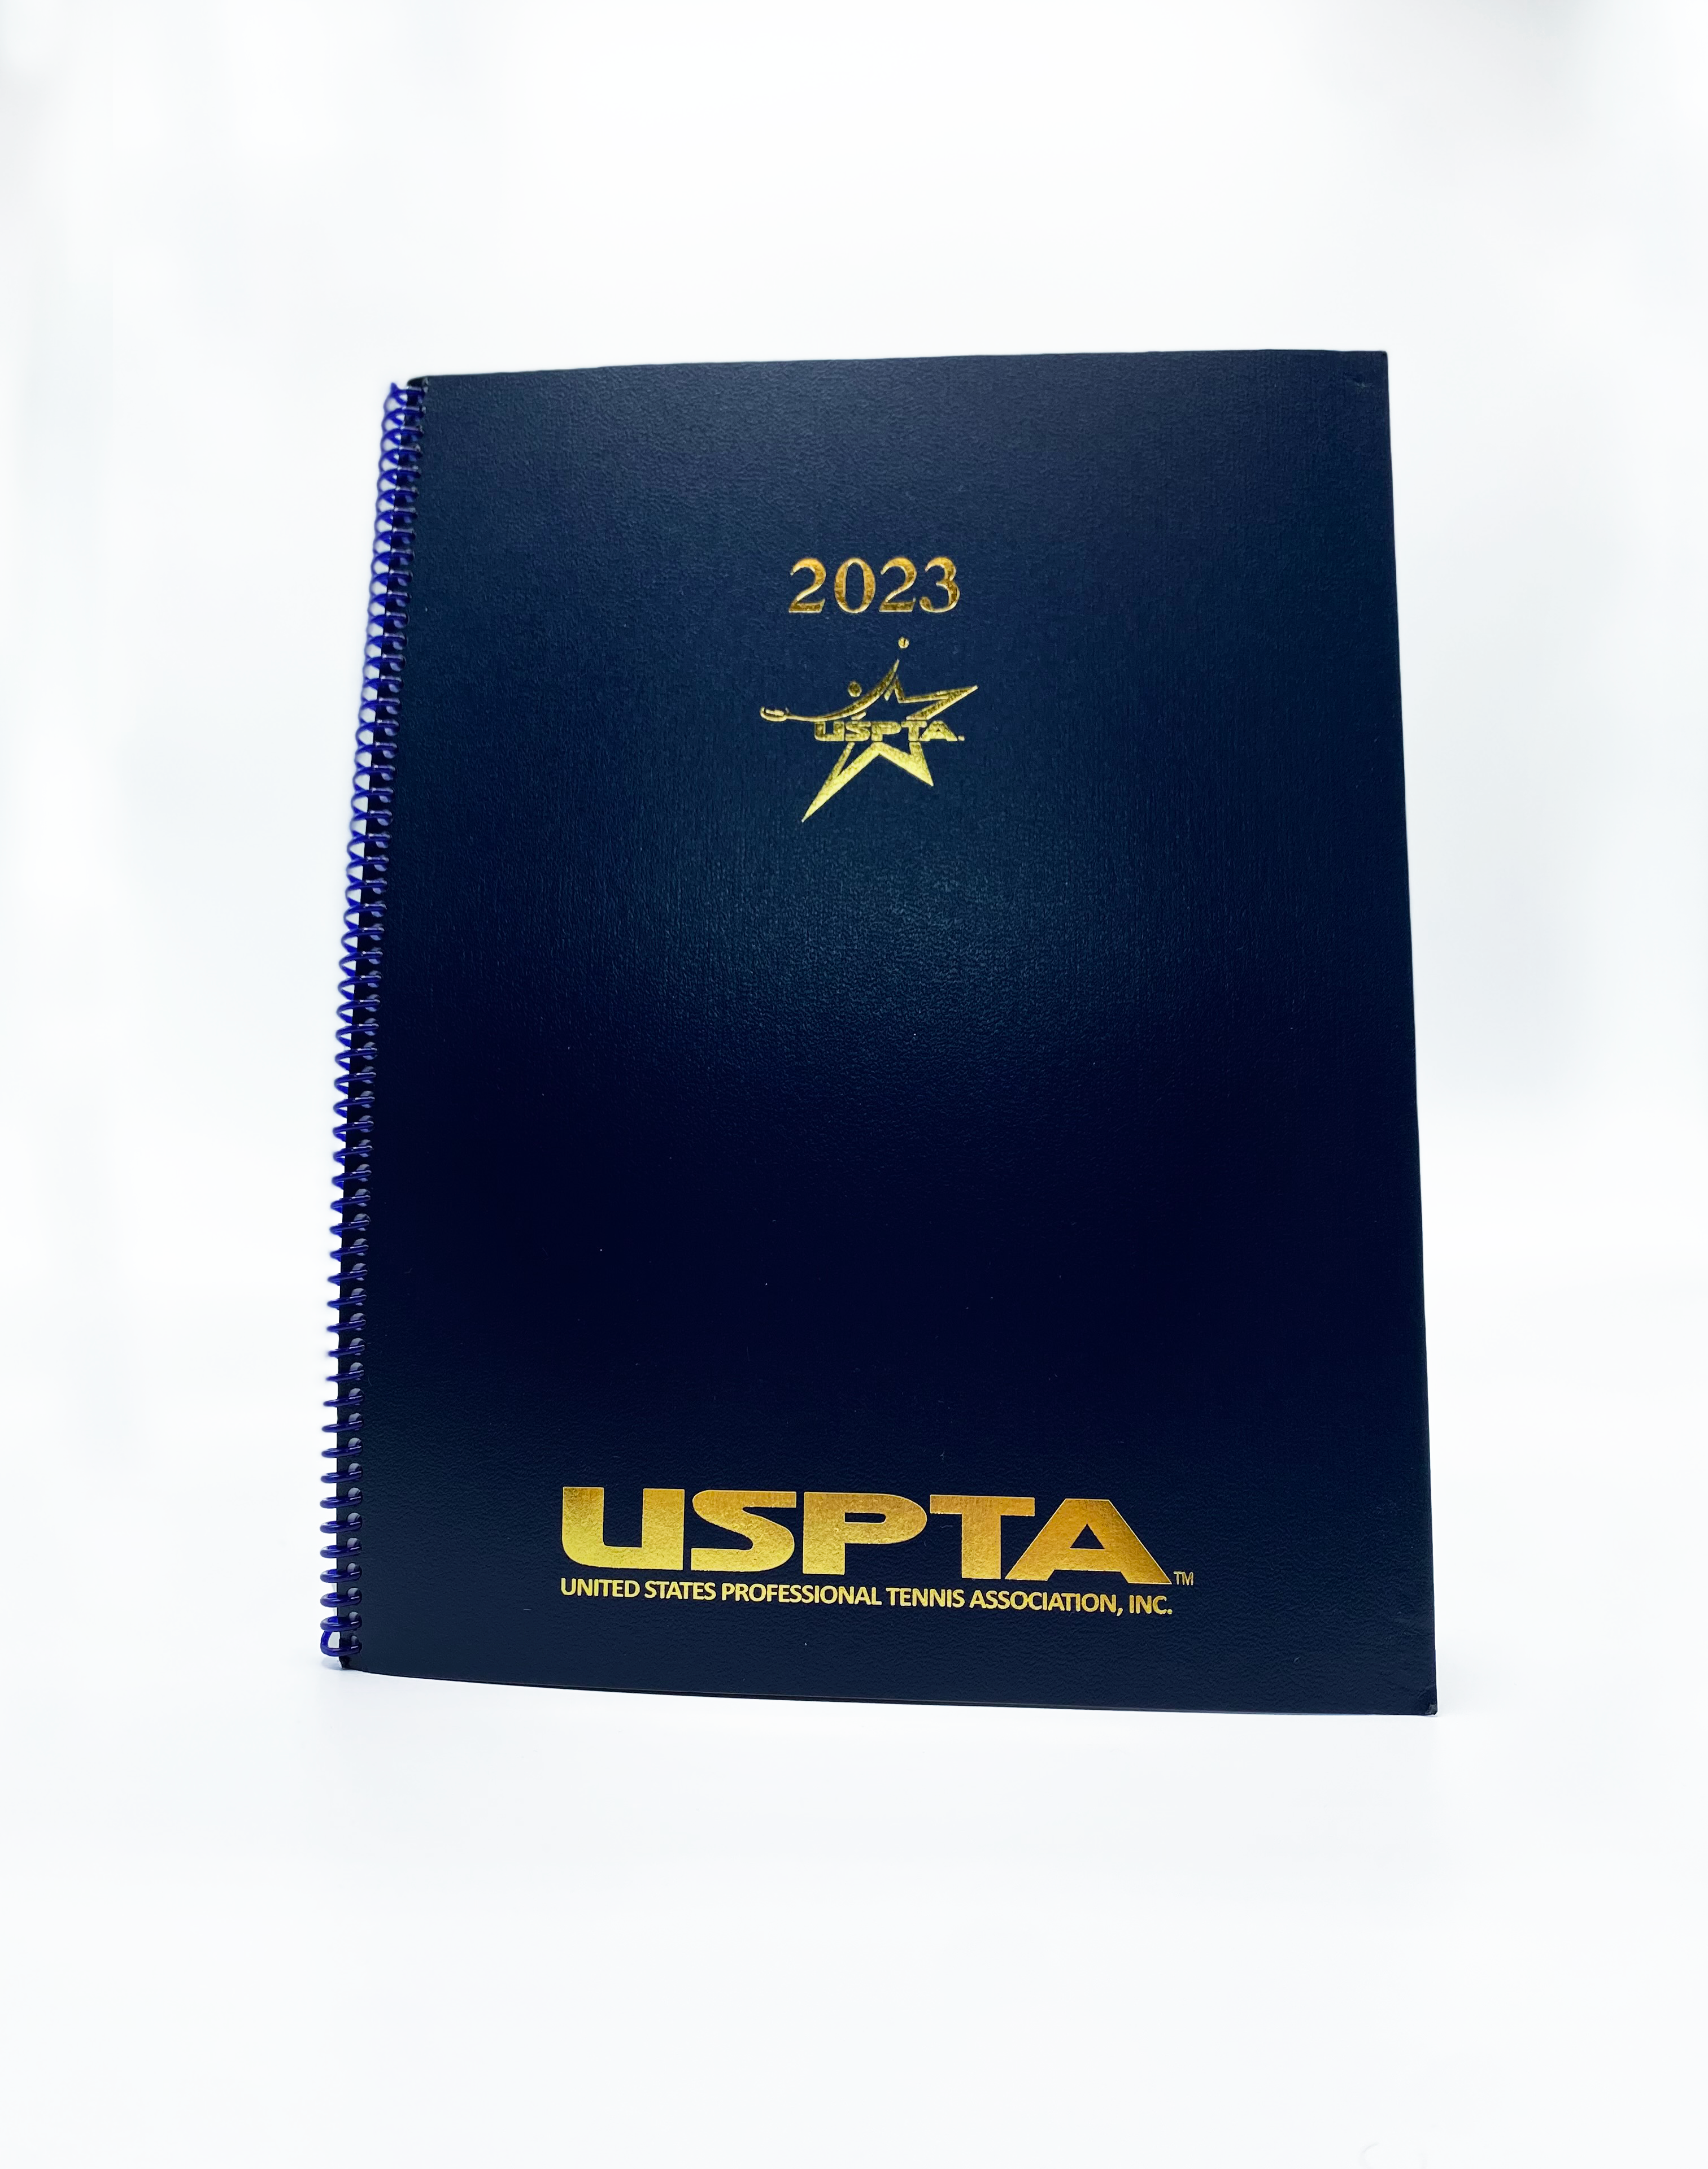 2023 USPTA Planners